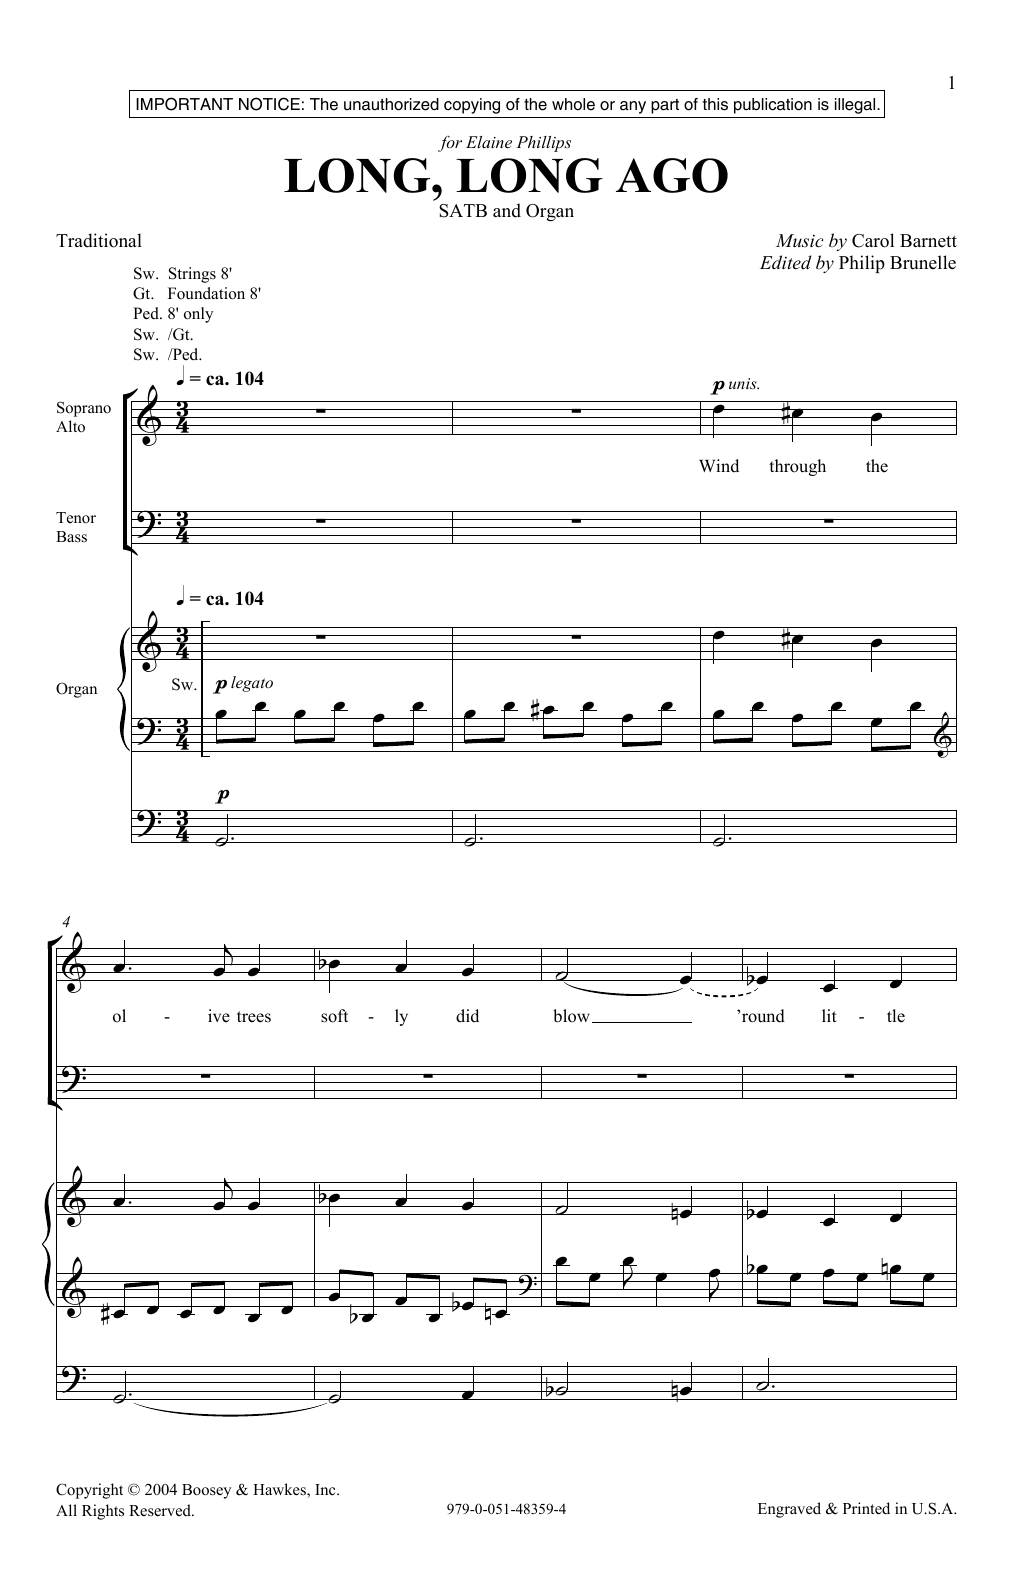 Carol Barnett Long, Long Ago Sheet Music Notes & Chords for SATB - Download or Print PDF